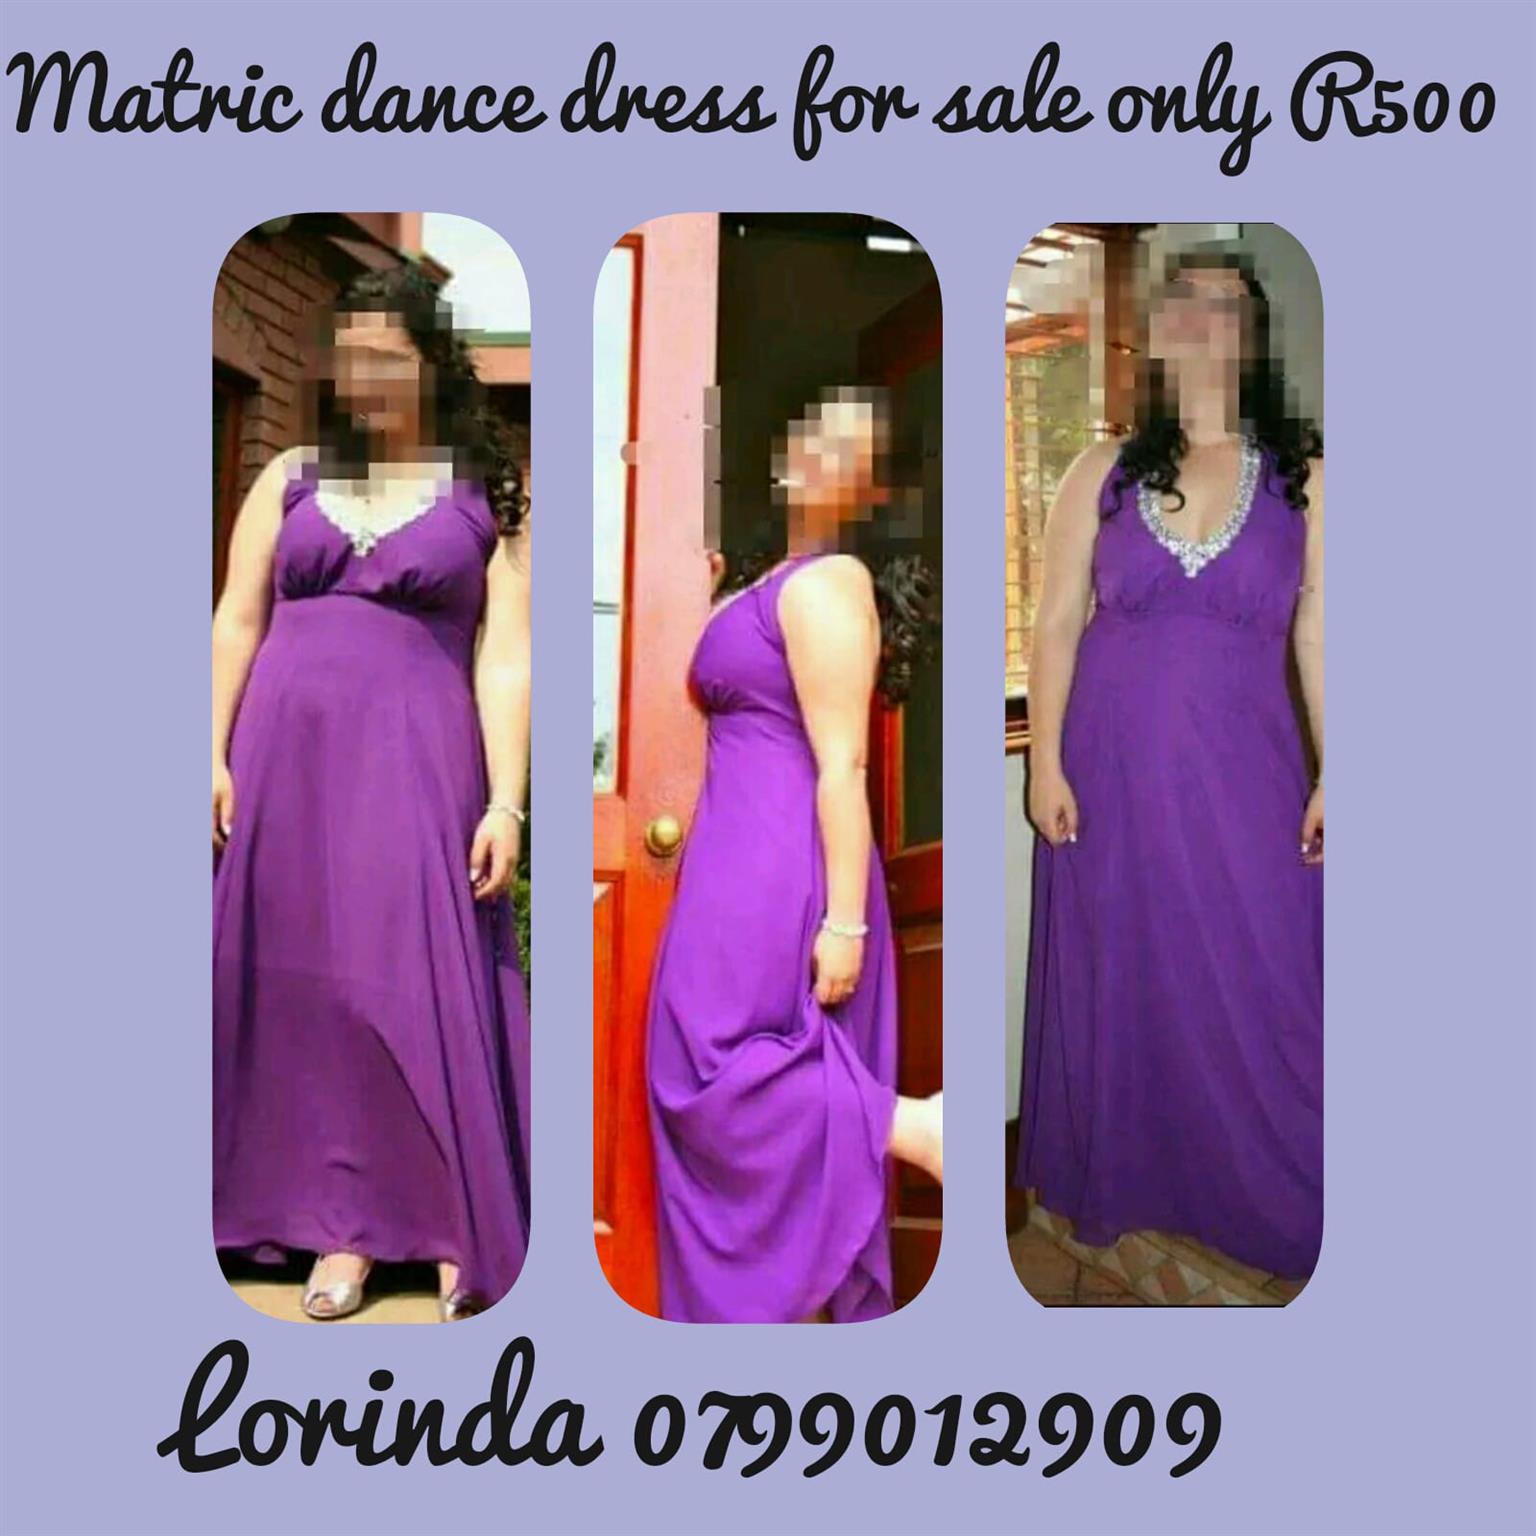 Matric dance dress 